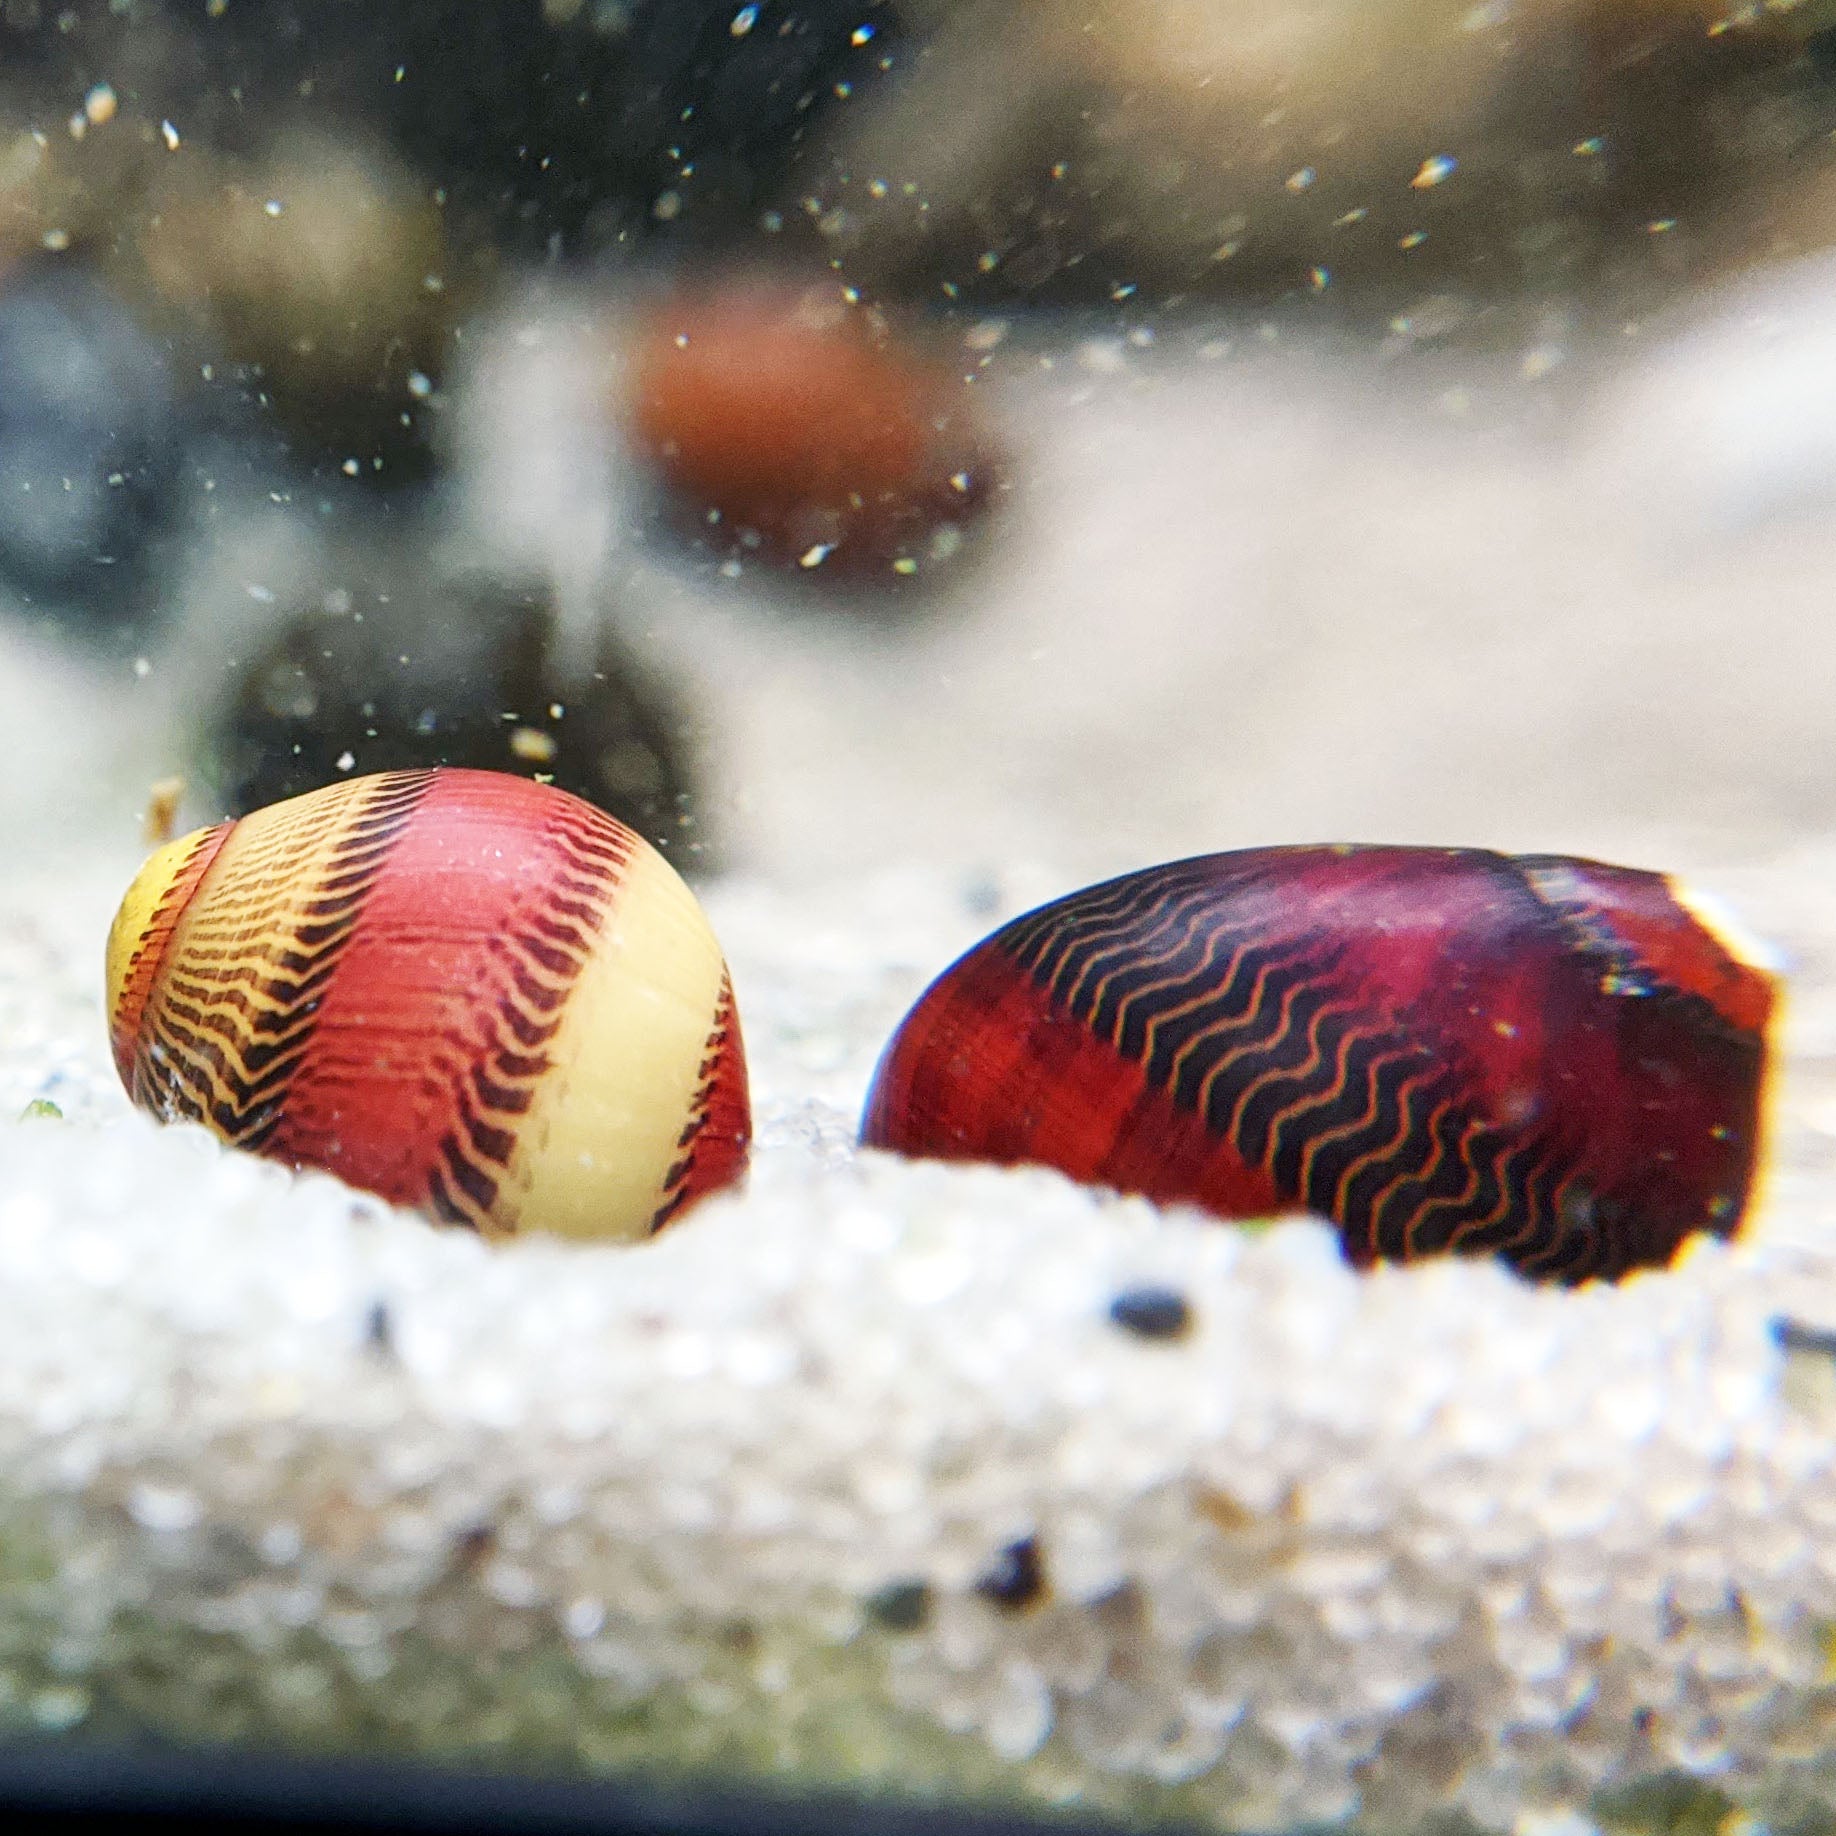 Red racer nerite snails.